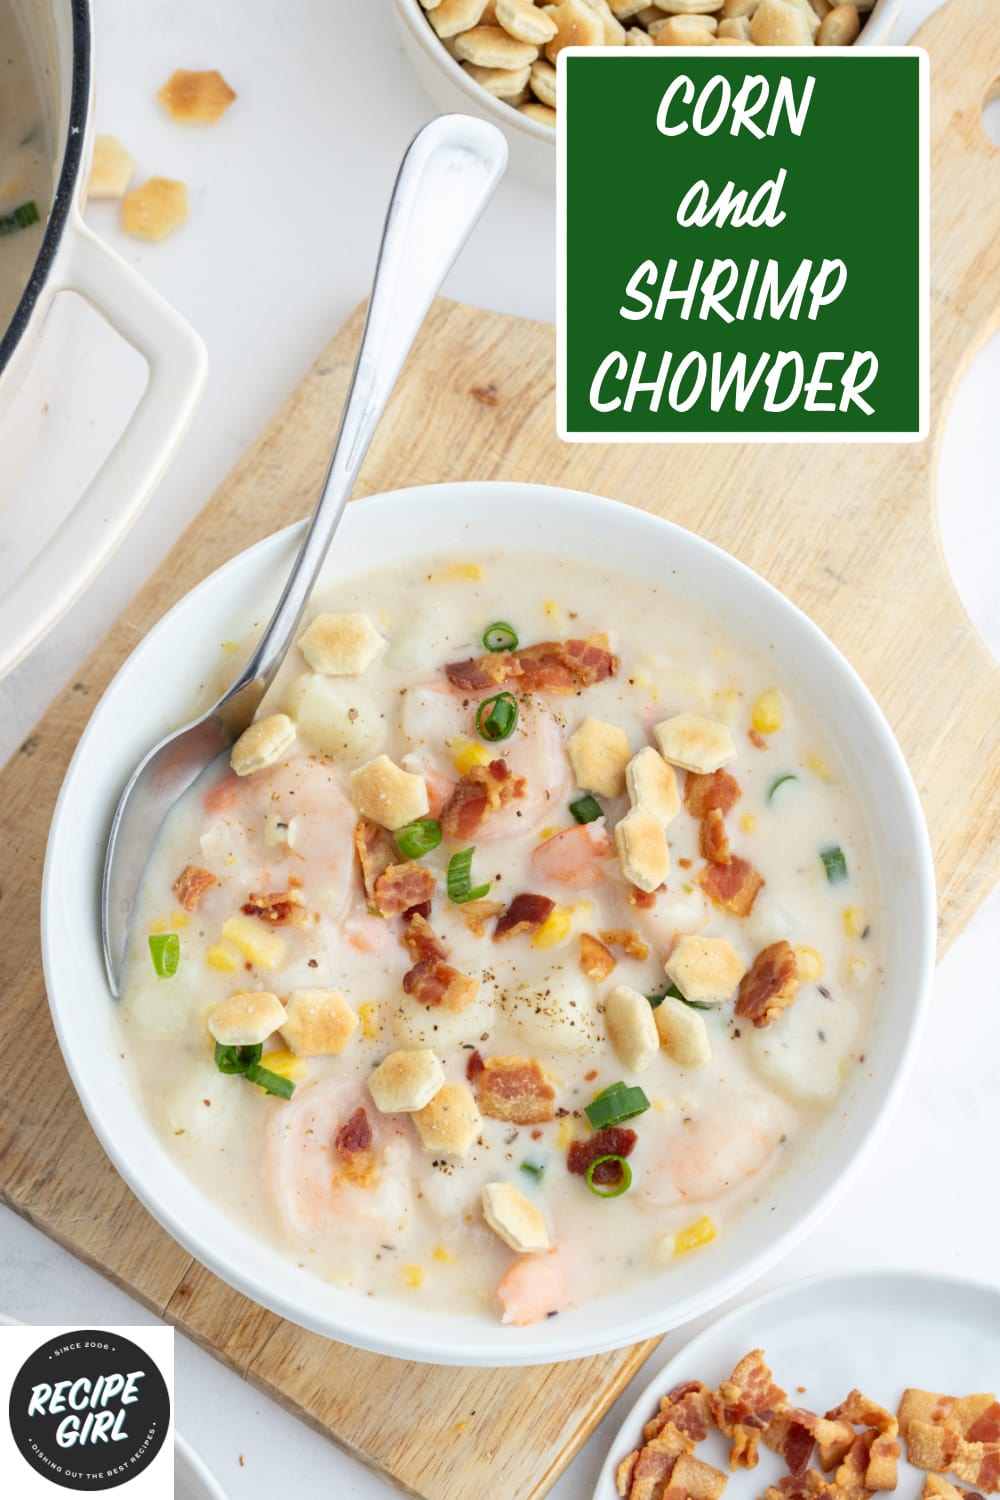 Corn and Shrimp Chowder - Recipe Girl®